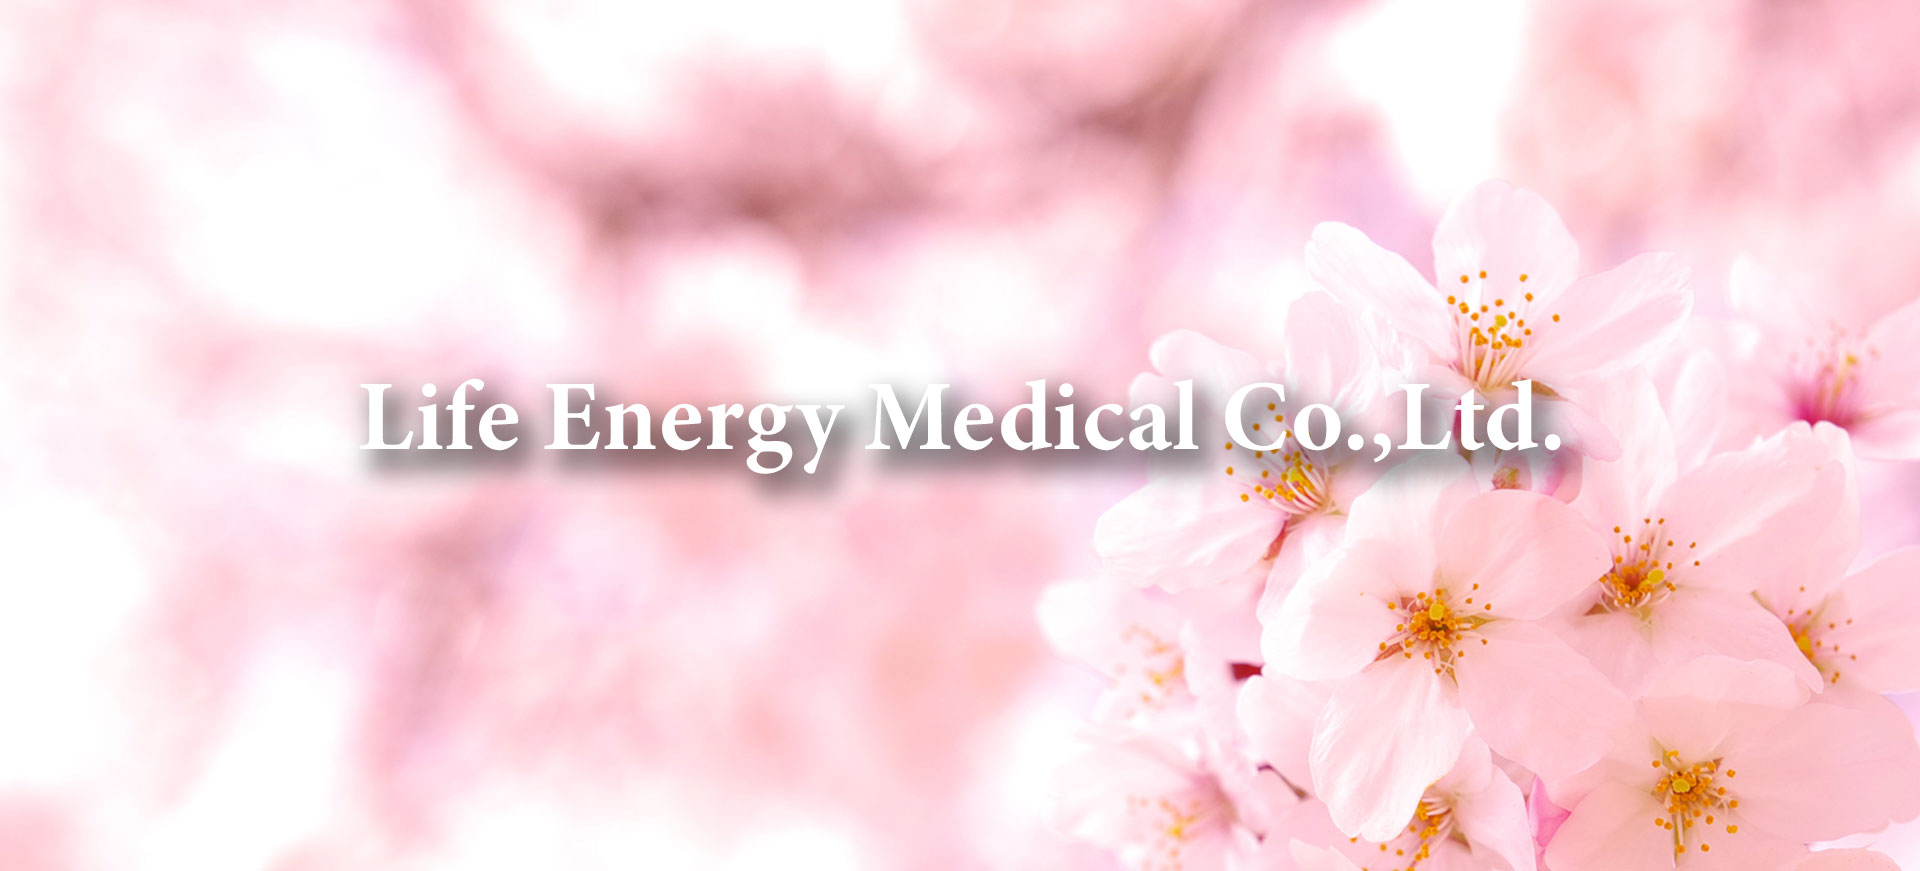 Life Energy Medical Co.,Ltd.